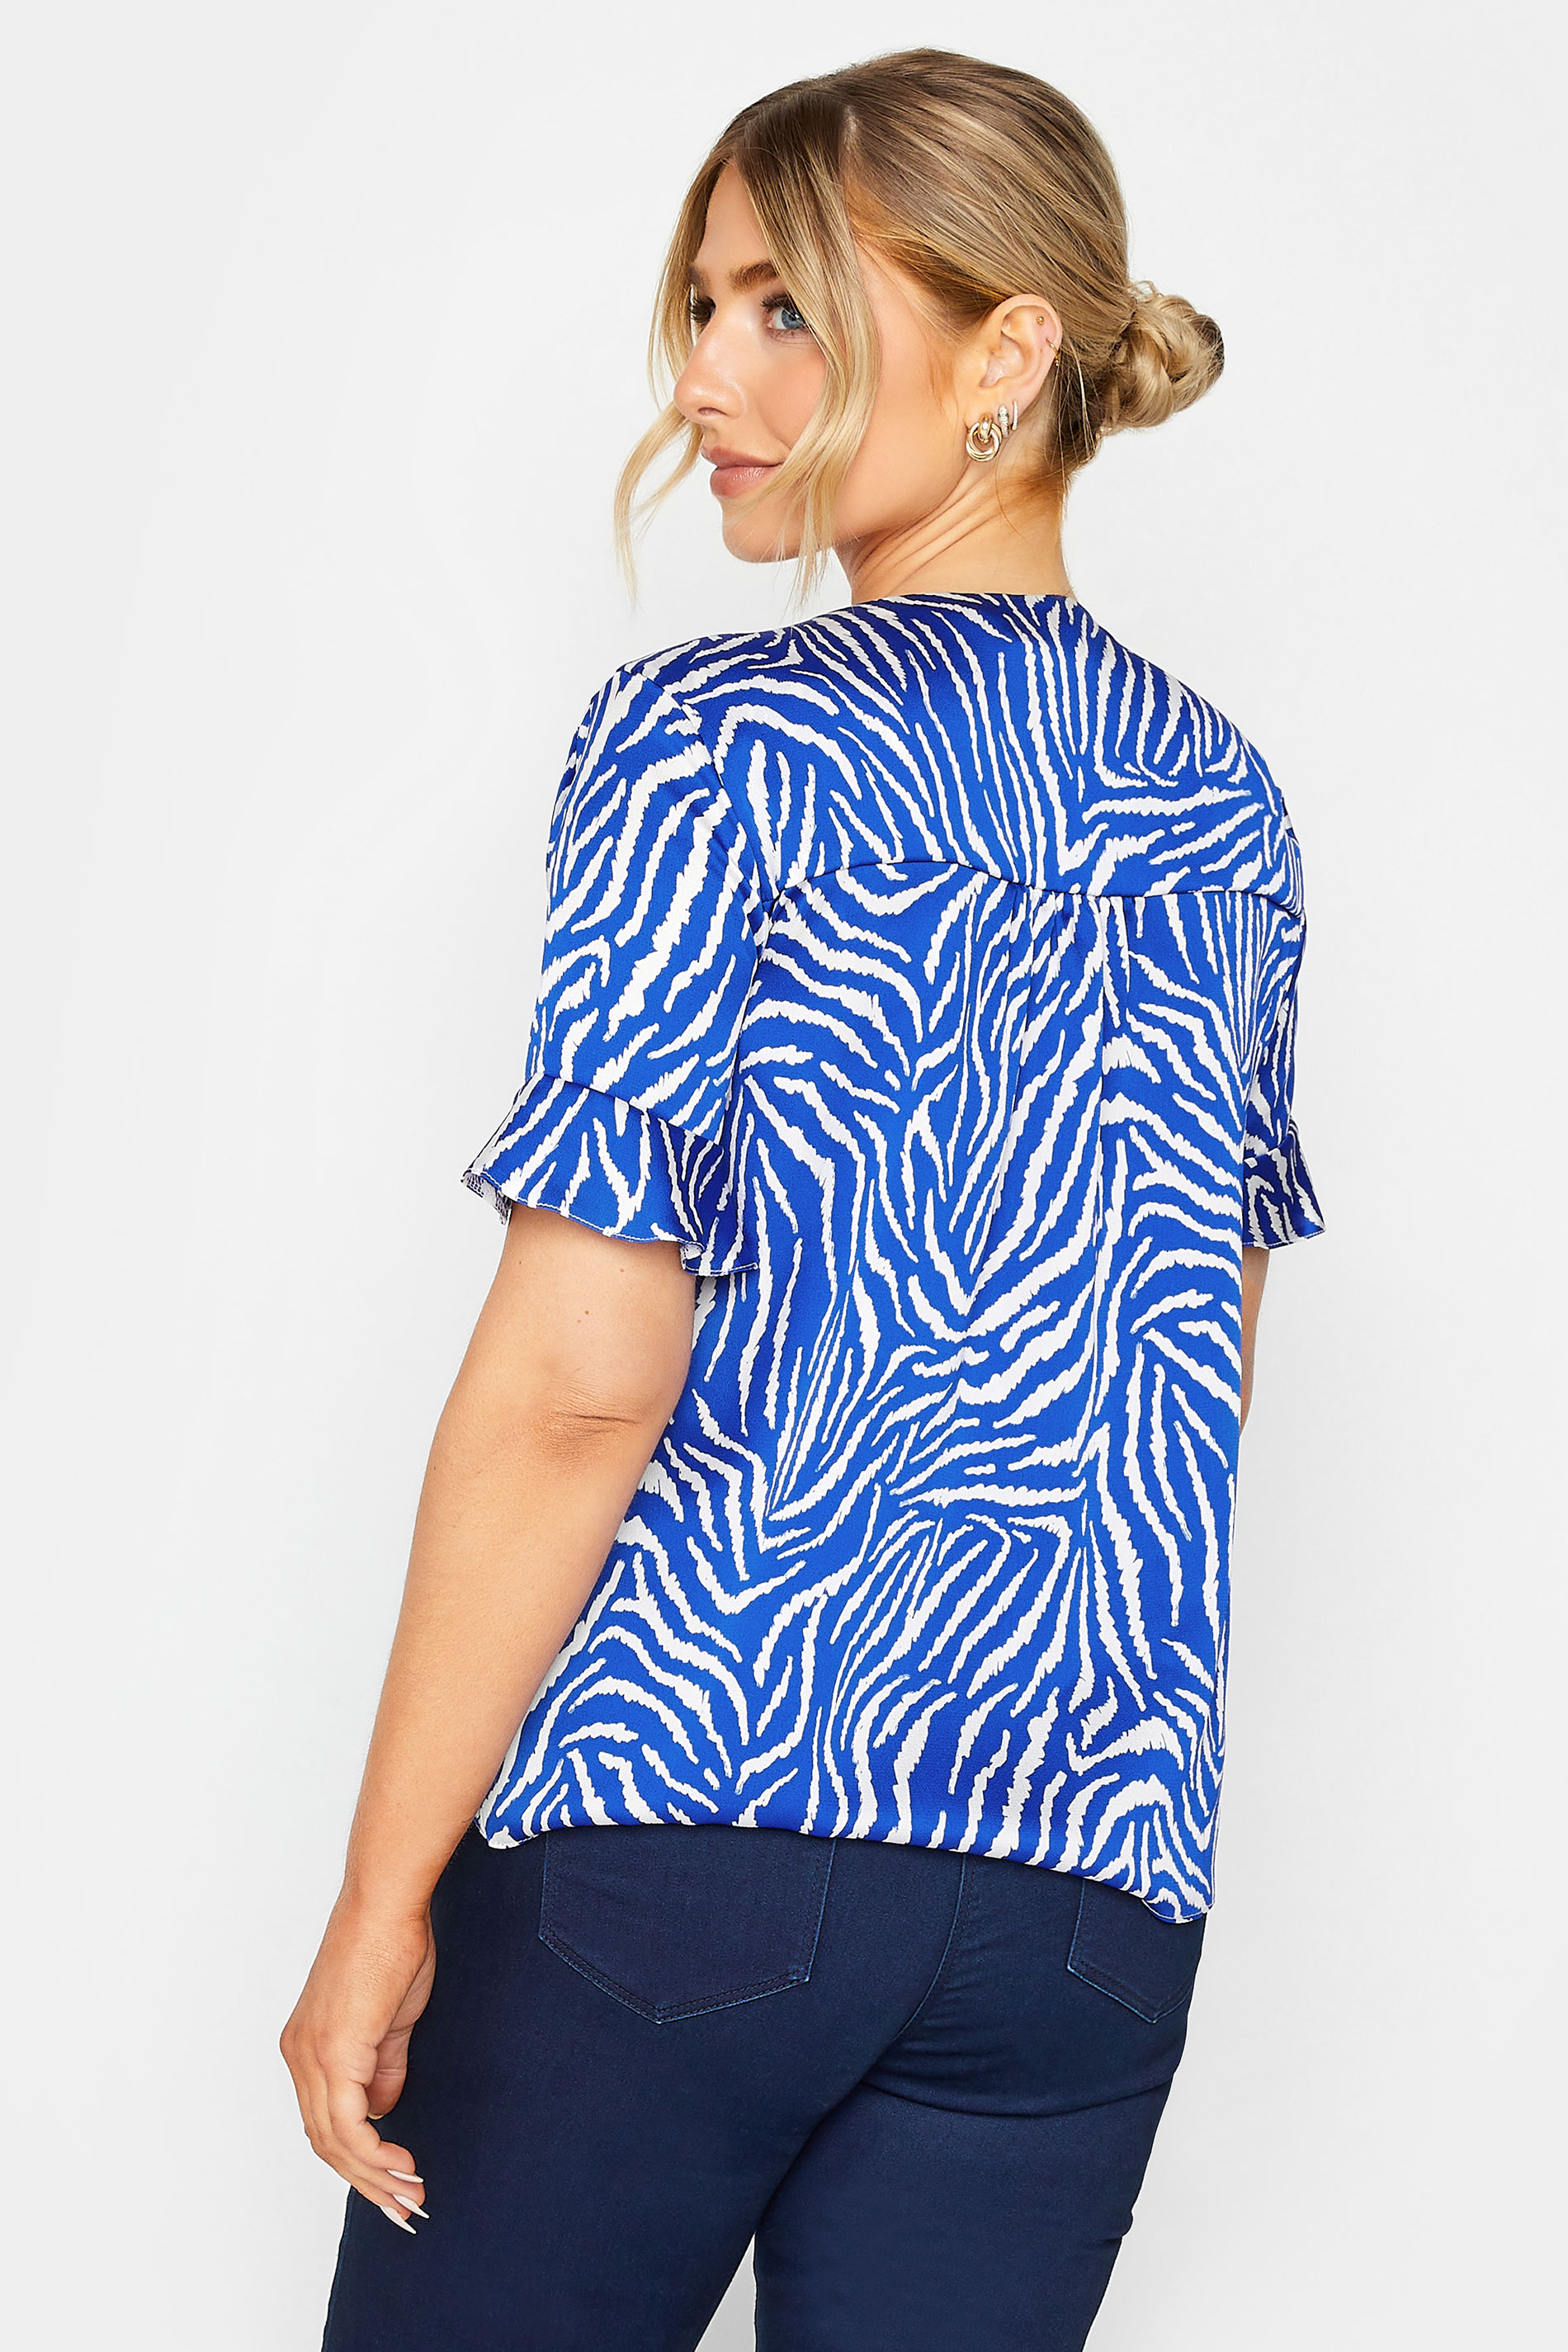 M&Co Cobalt Blue Zebra Print Shirt | M&Co 3